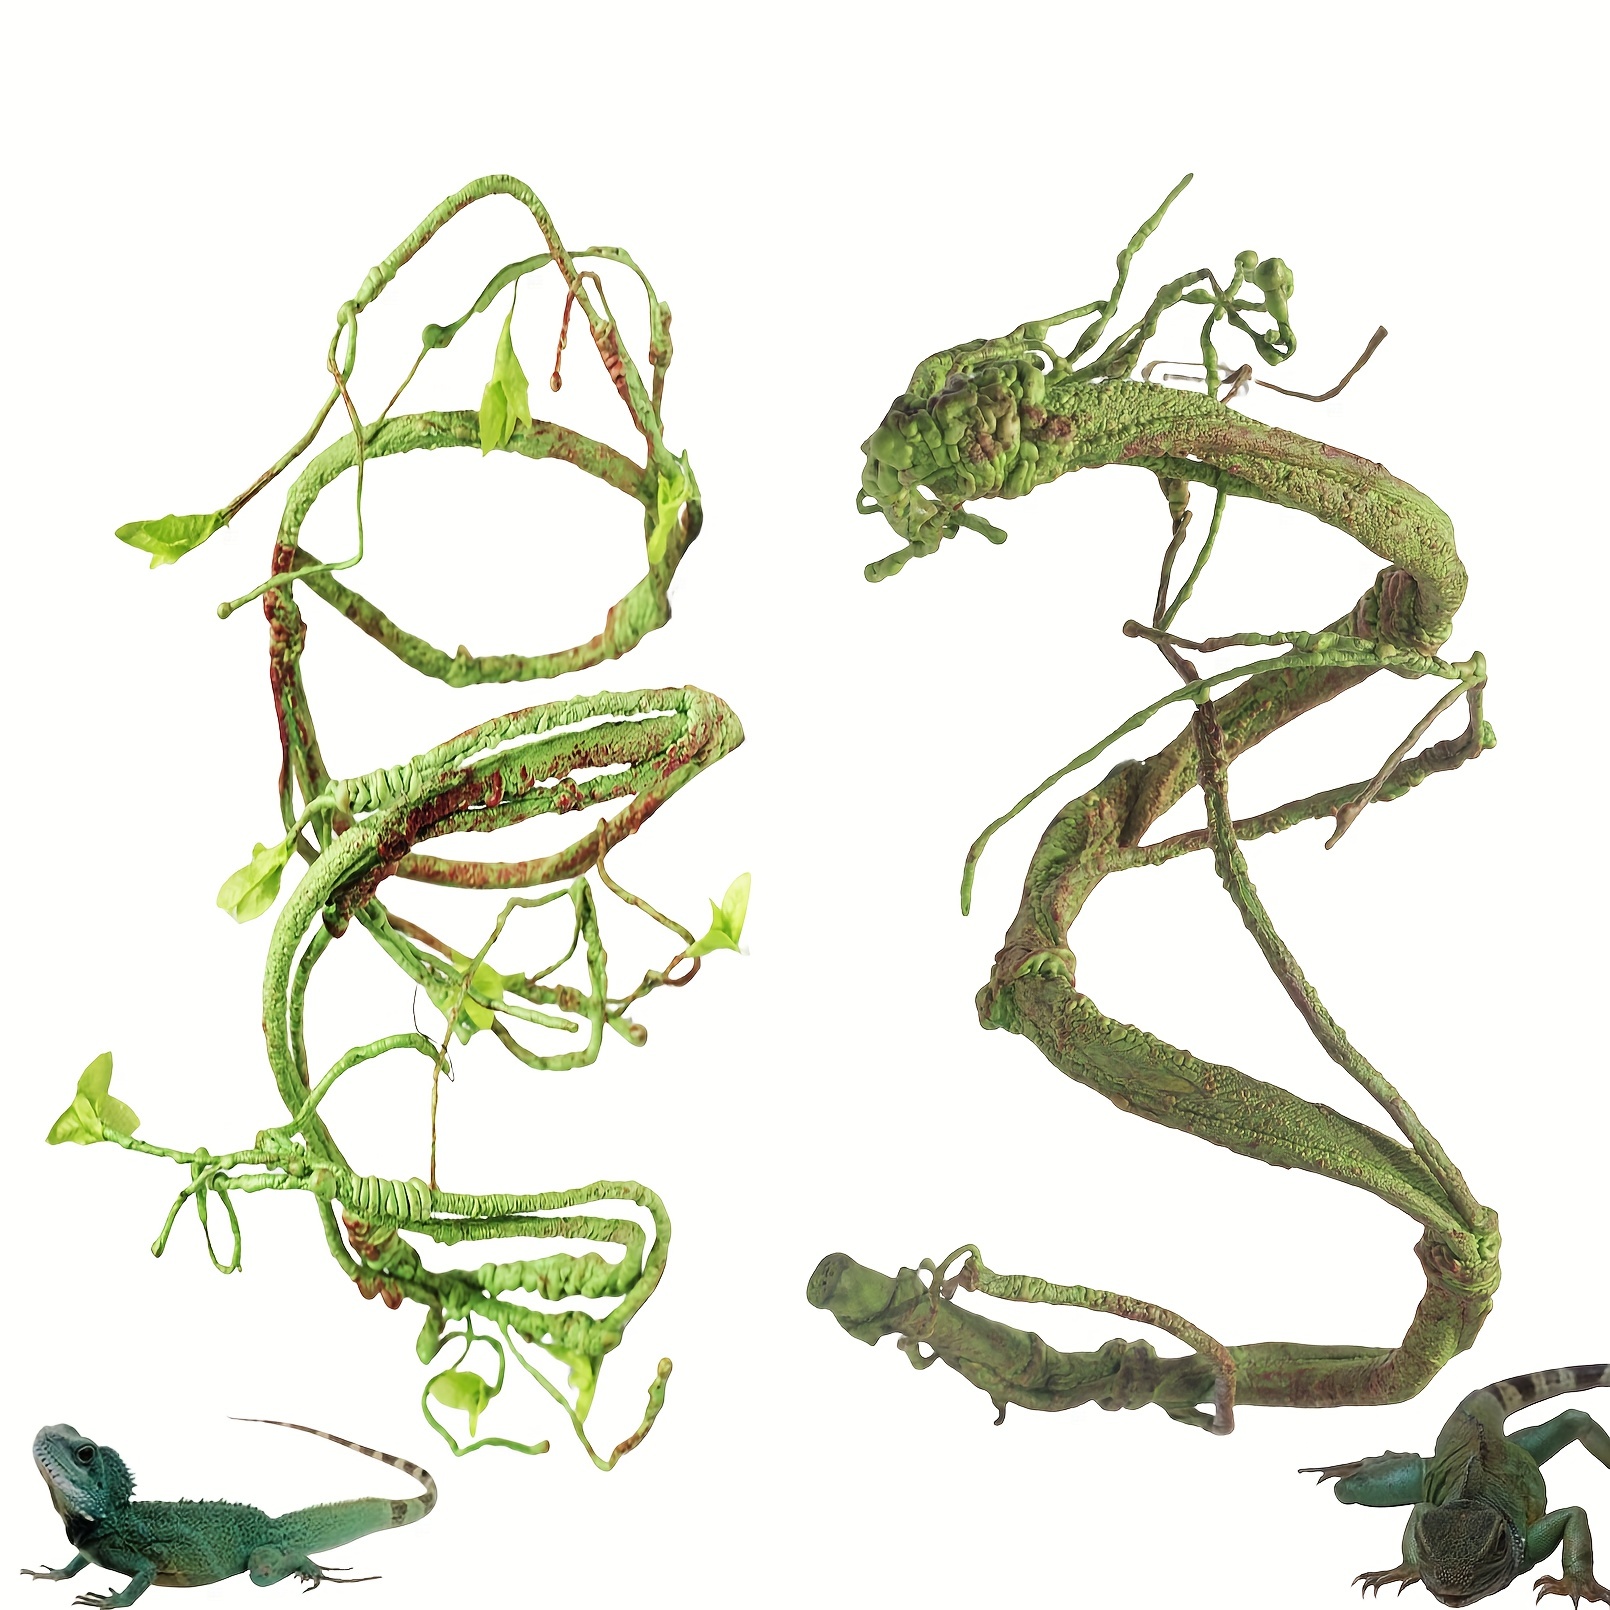 kathson Reptile Tank Hanging Vines Plants,Bearded Dragons Habitat Bendable  Jungle Climbing Fake Vine Terrarium Decorations for